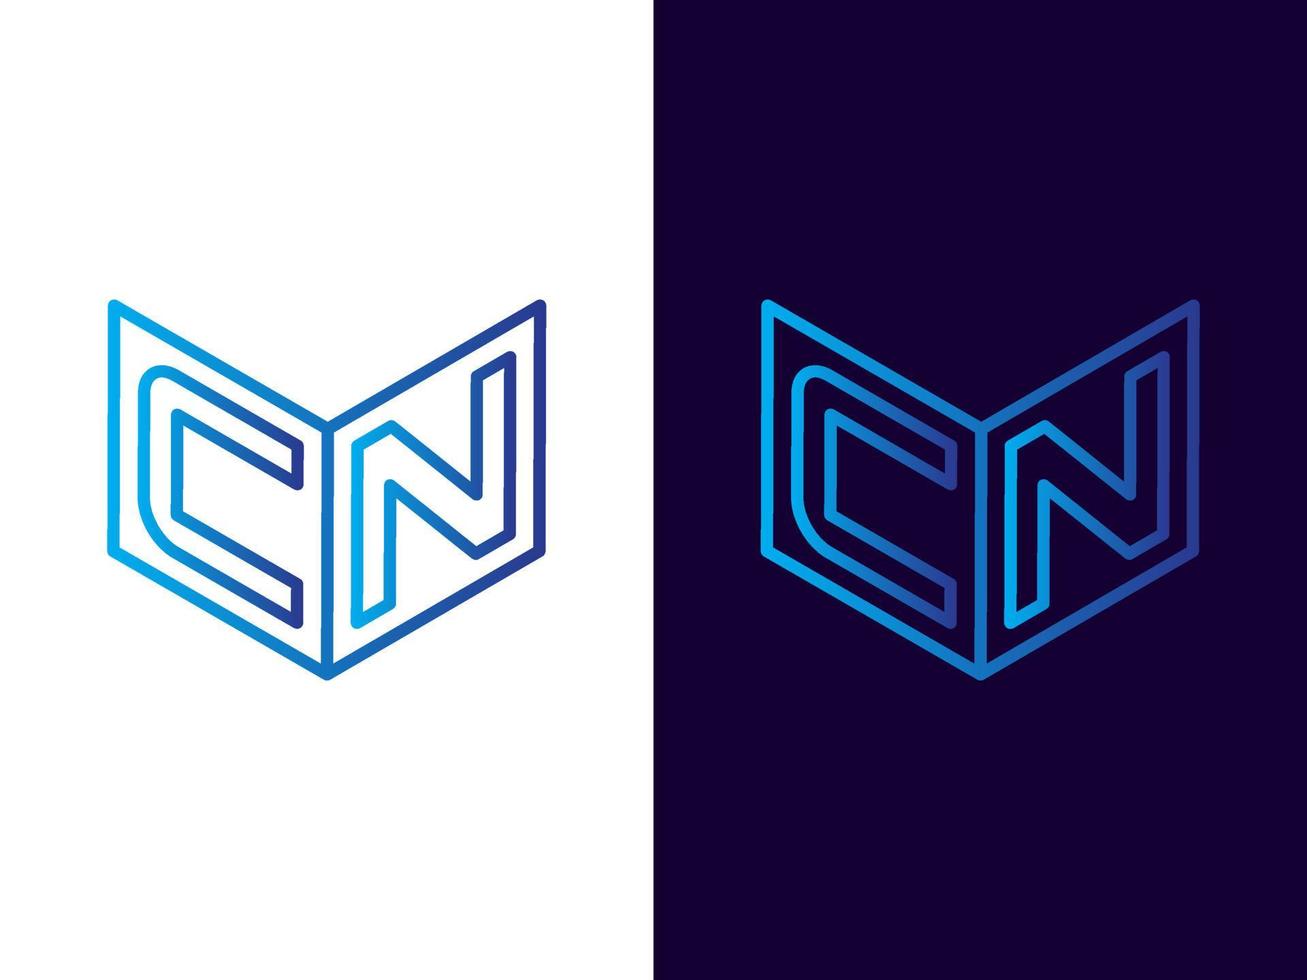 beginletter cn minimalistisch en modern 3D-logo-ontwerp vector